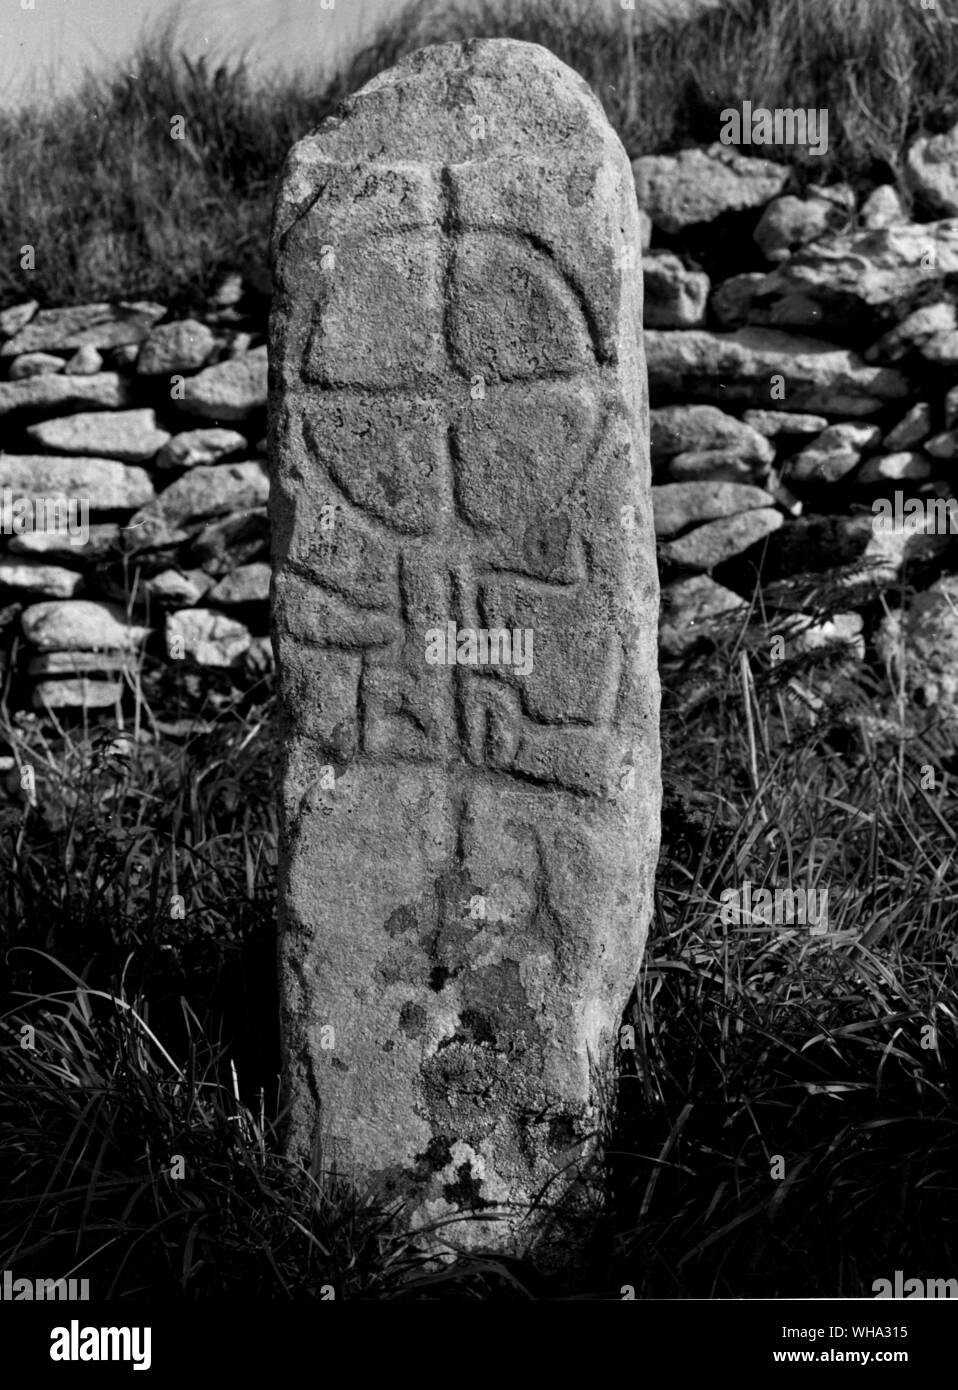 County Kerry, Ireland: Inscribed stone at Gallarus. Stock Photo